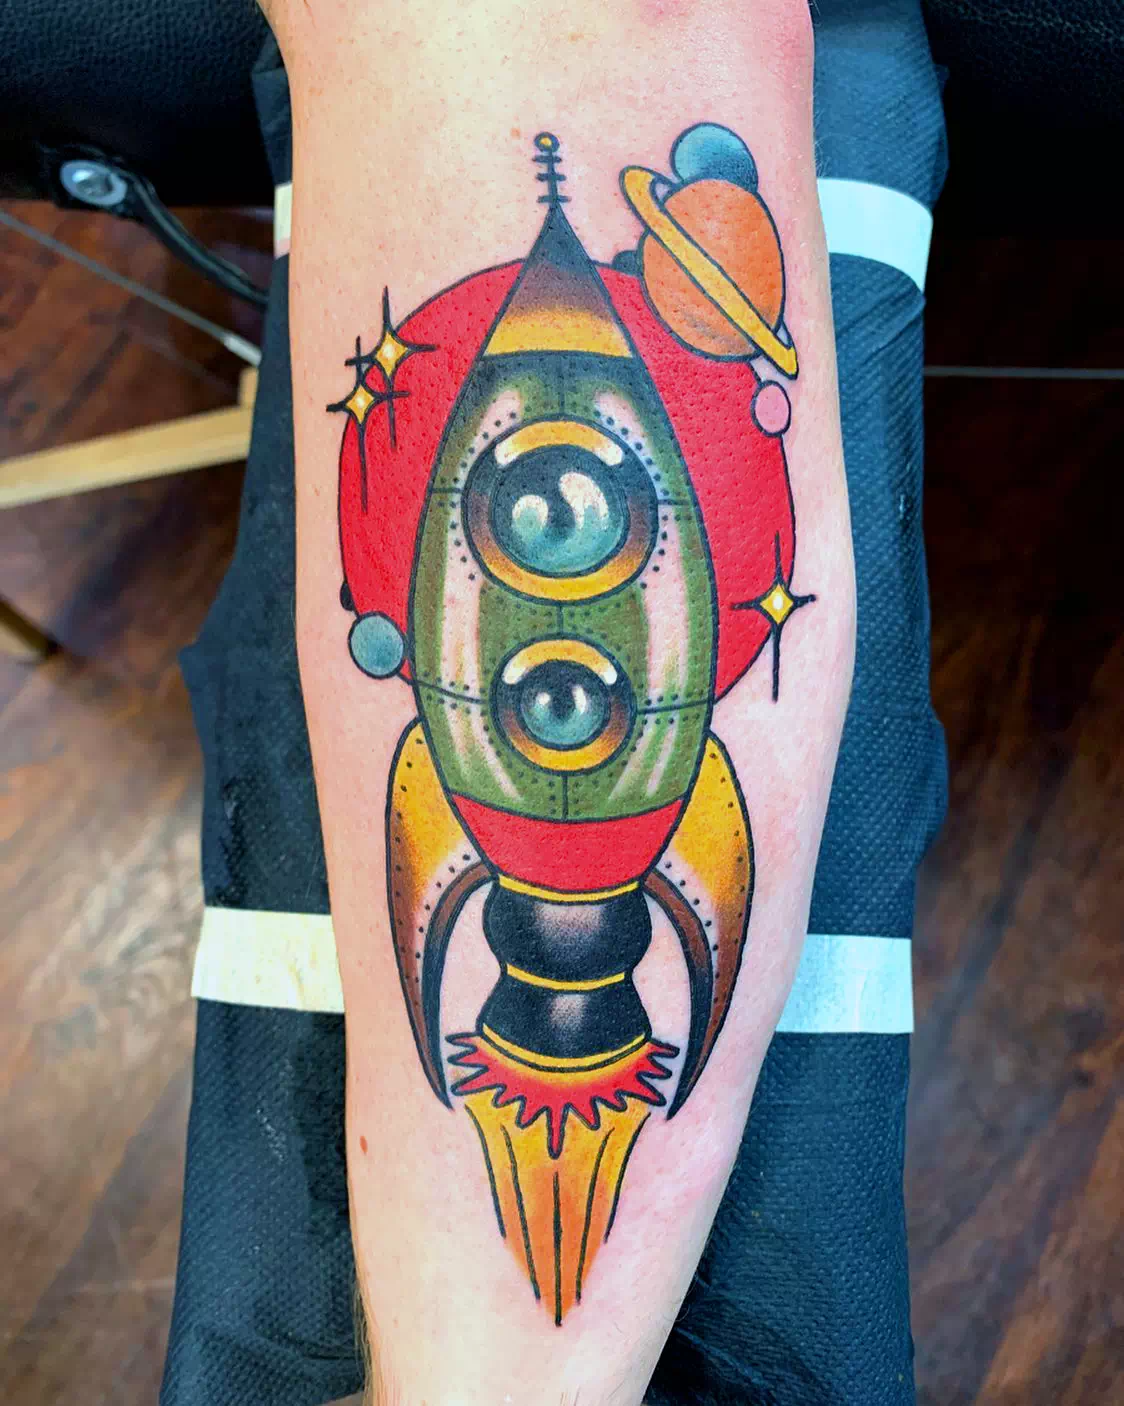 Tatuajes de alienígenas y cohetes 2